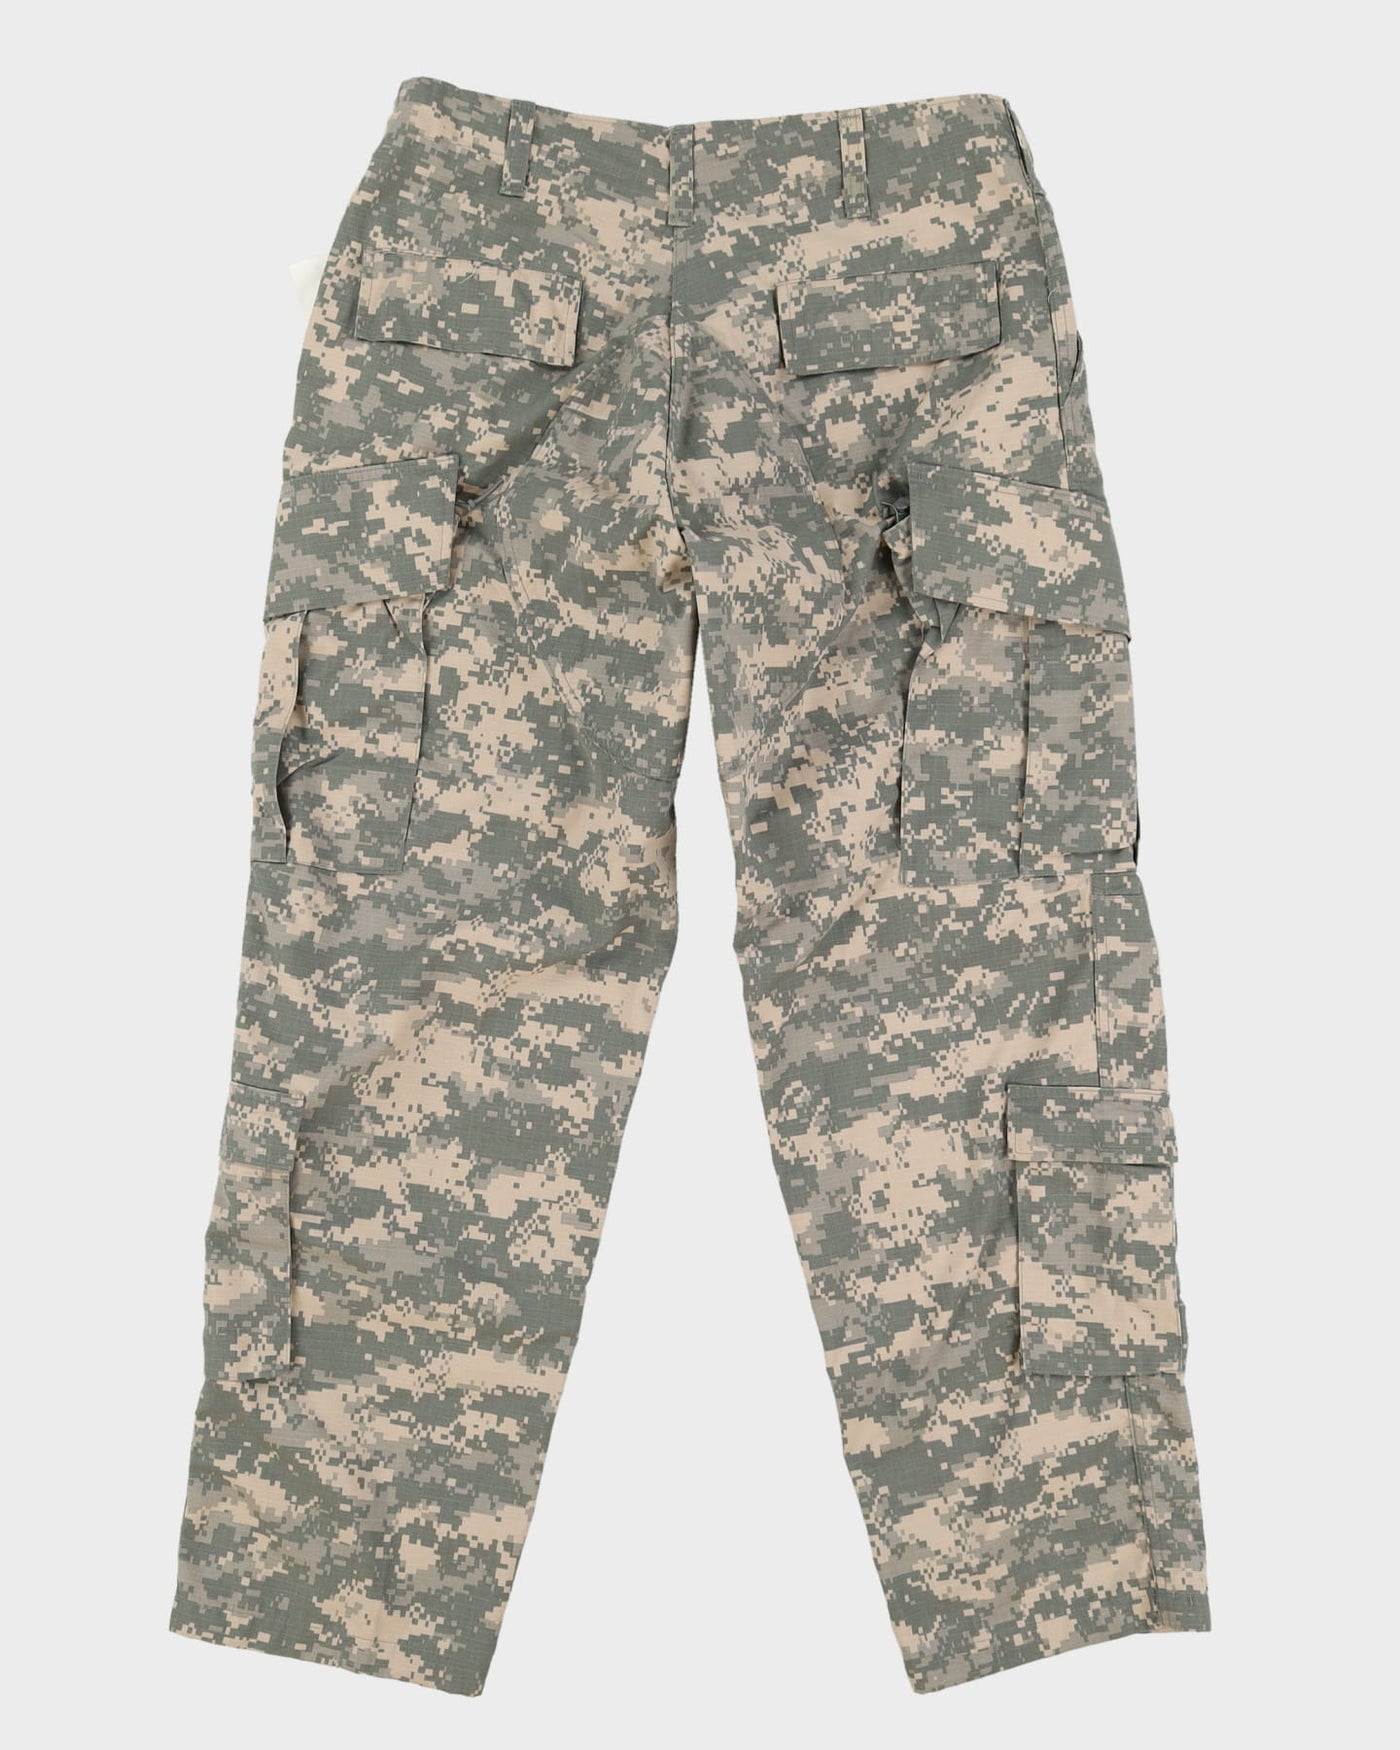 2010s US Army Digital Camo ACU Trousers - 34x30